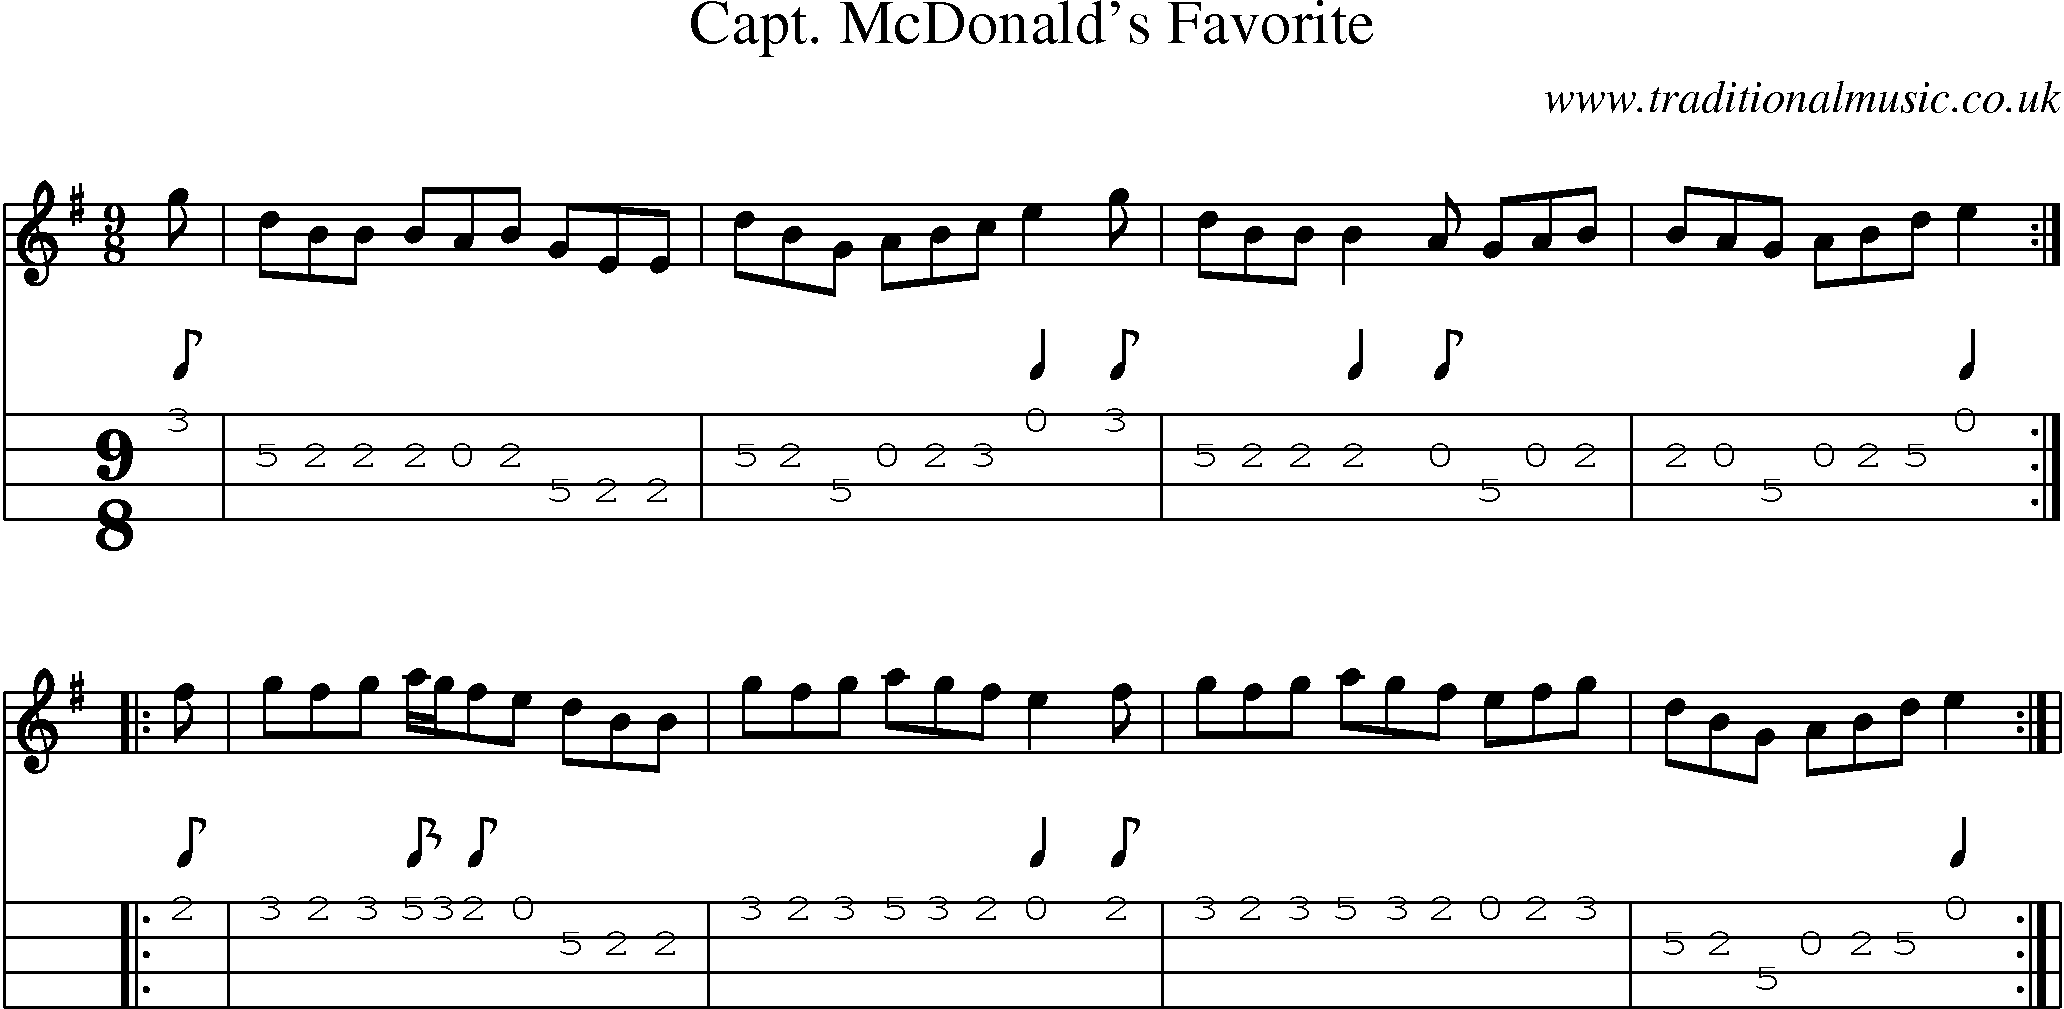 Music Score and Mandolin Tabs for Capt Mcdonalds Favorite